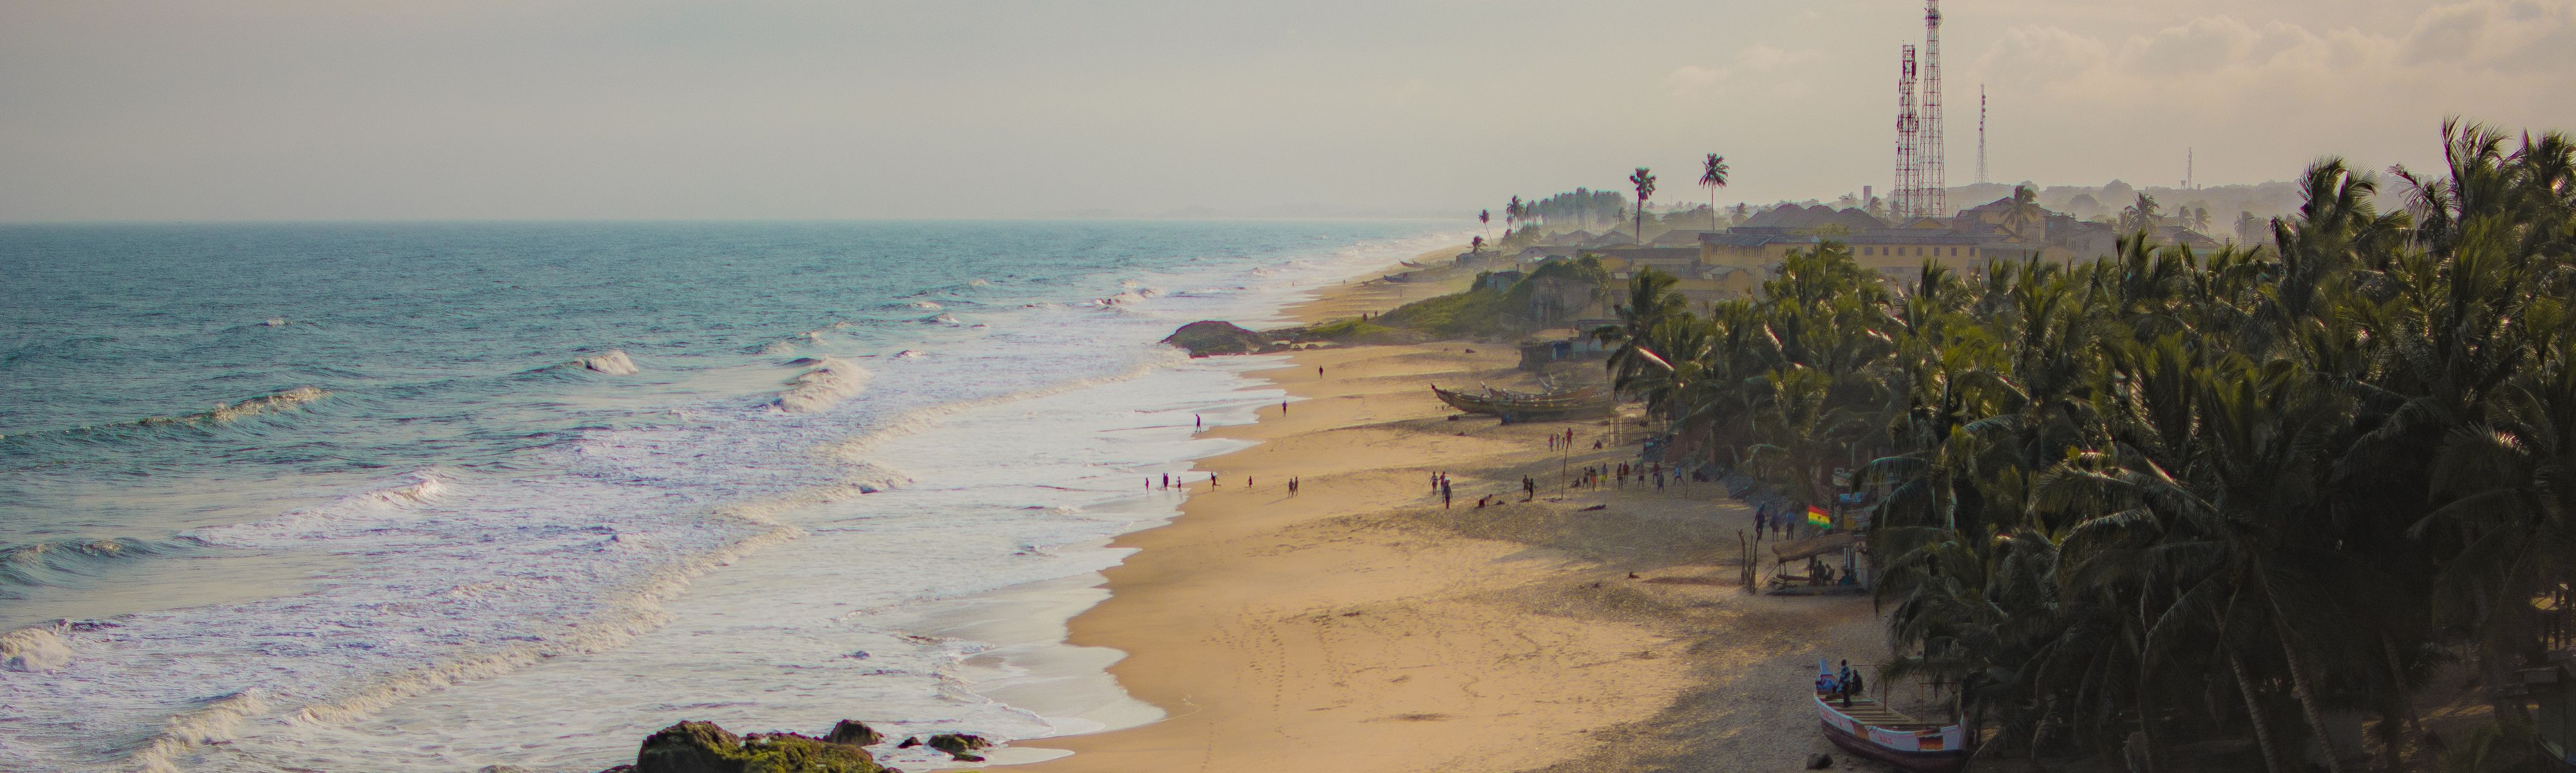 gold coast beach in ghana